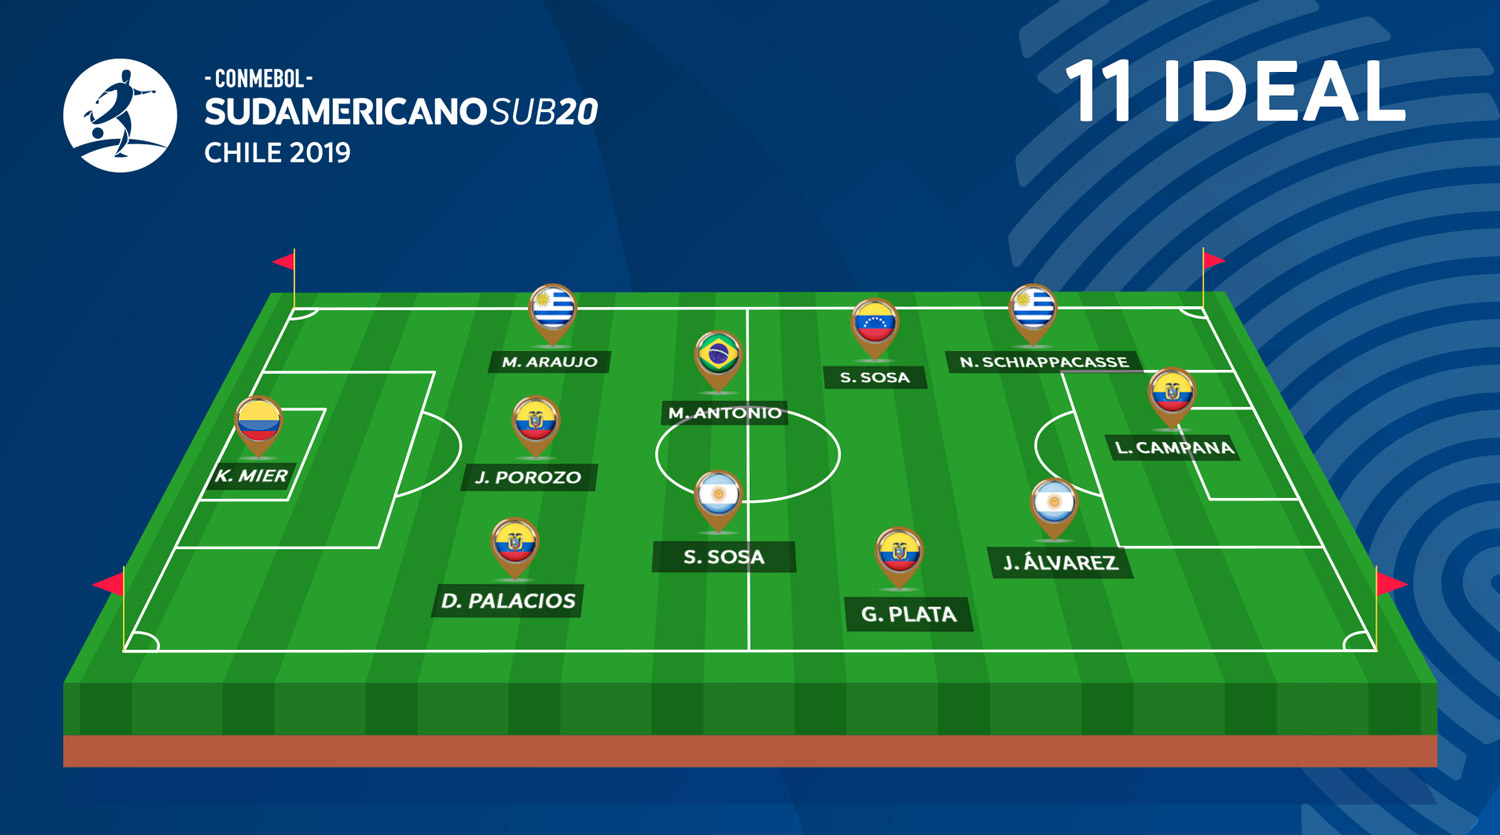 Once ideal sudamericano sub 20 2019